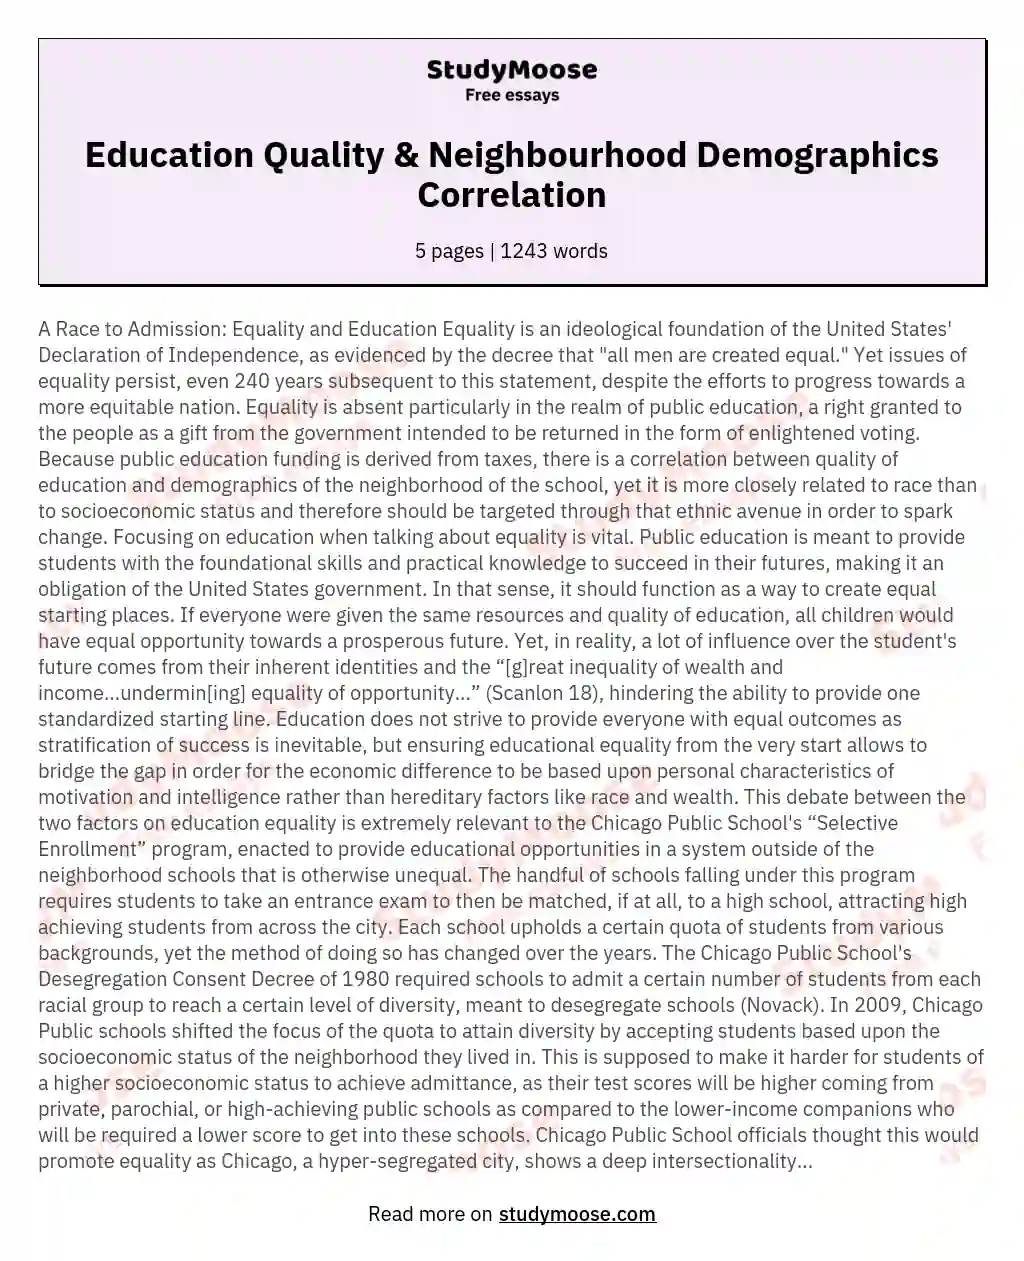 Education Quality & Neighbourhood Demographics Correlation essay